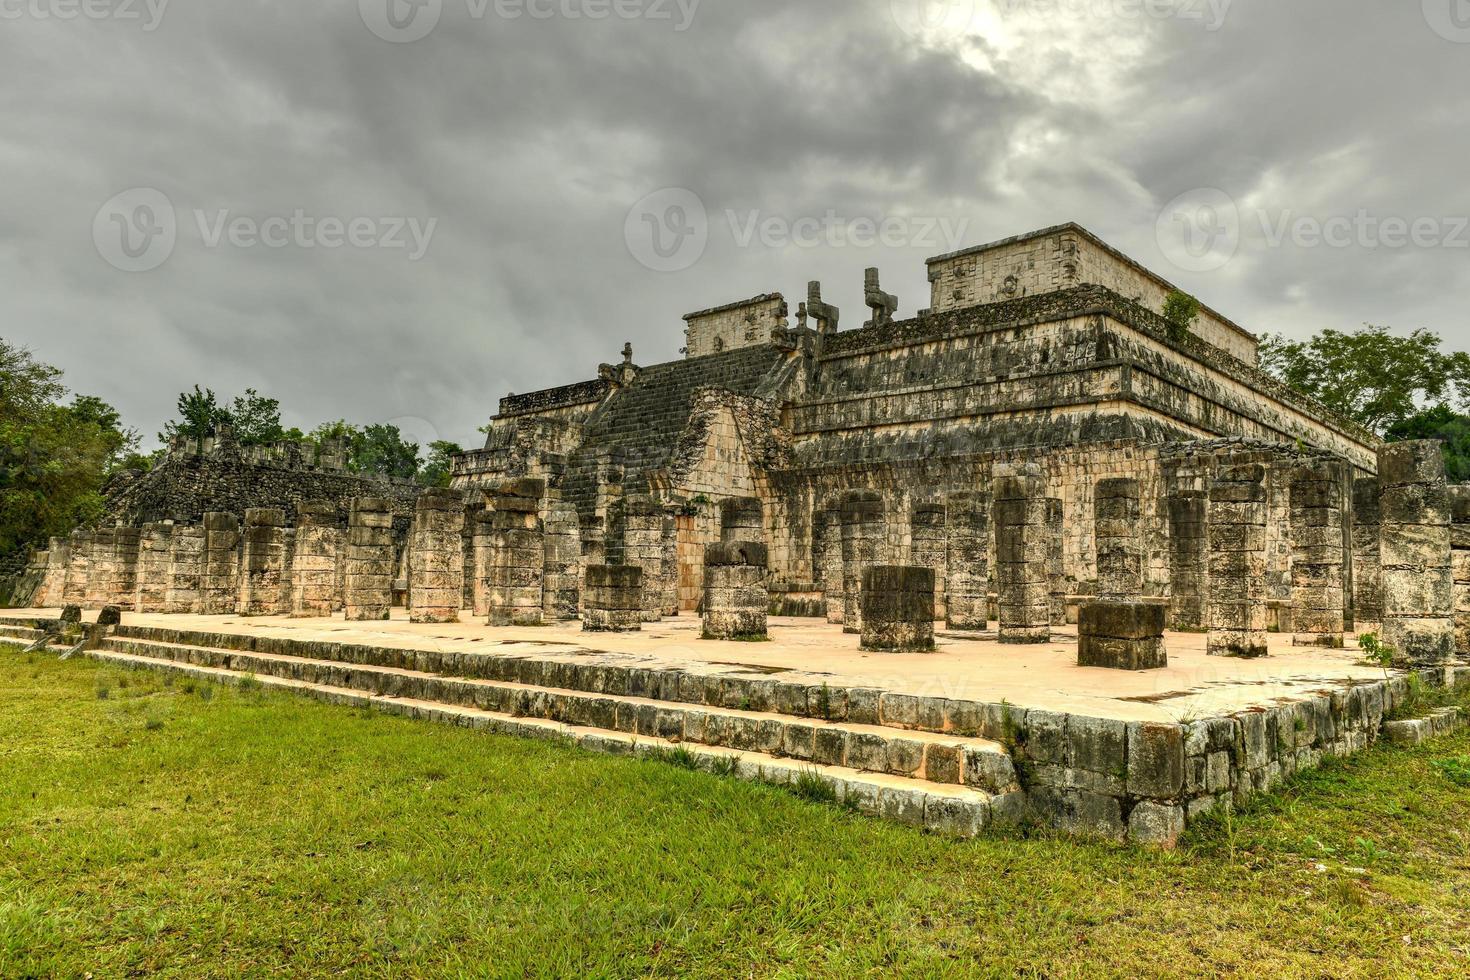 templo de los guerreros, tempel av de krigare, chichen itza i yucatan, Mexiko, en unesco värld arv webbplats. foto